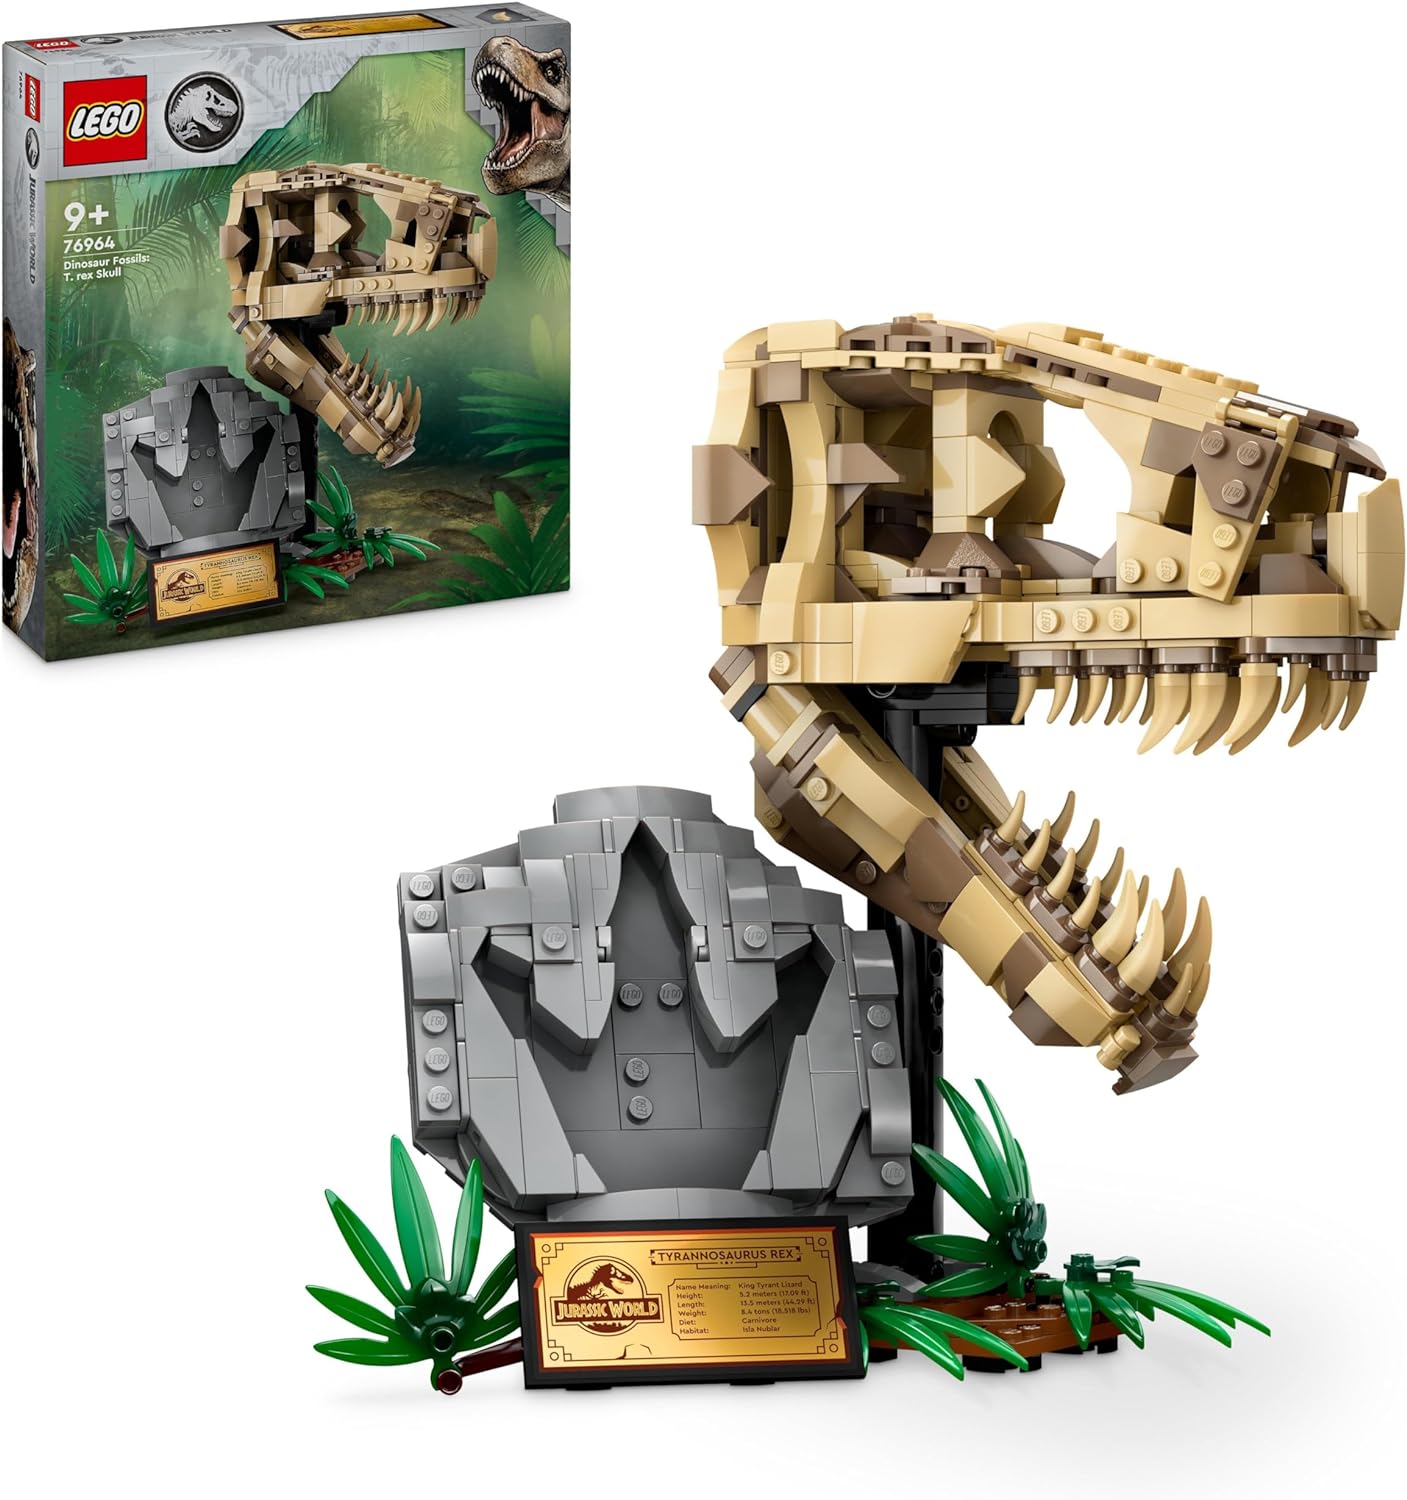 LEGO Jurassic World Dinosaur Fossils: T.rex Head, Dinosaur Toy for Building, Dinosaur Decoration for Children\'s Room, T-Rex Skull Skeleton with Footprint, Gift for Boys and Girls 76964